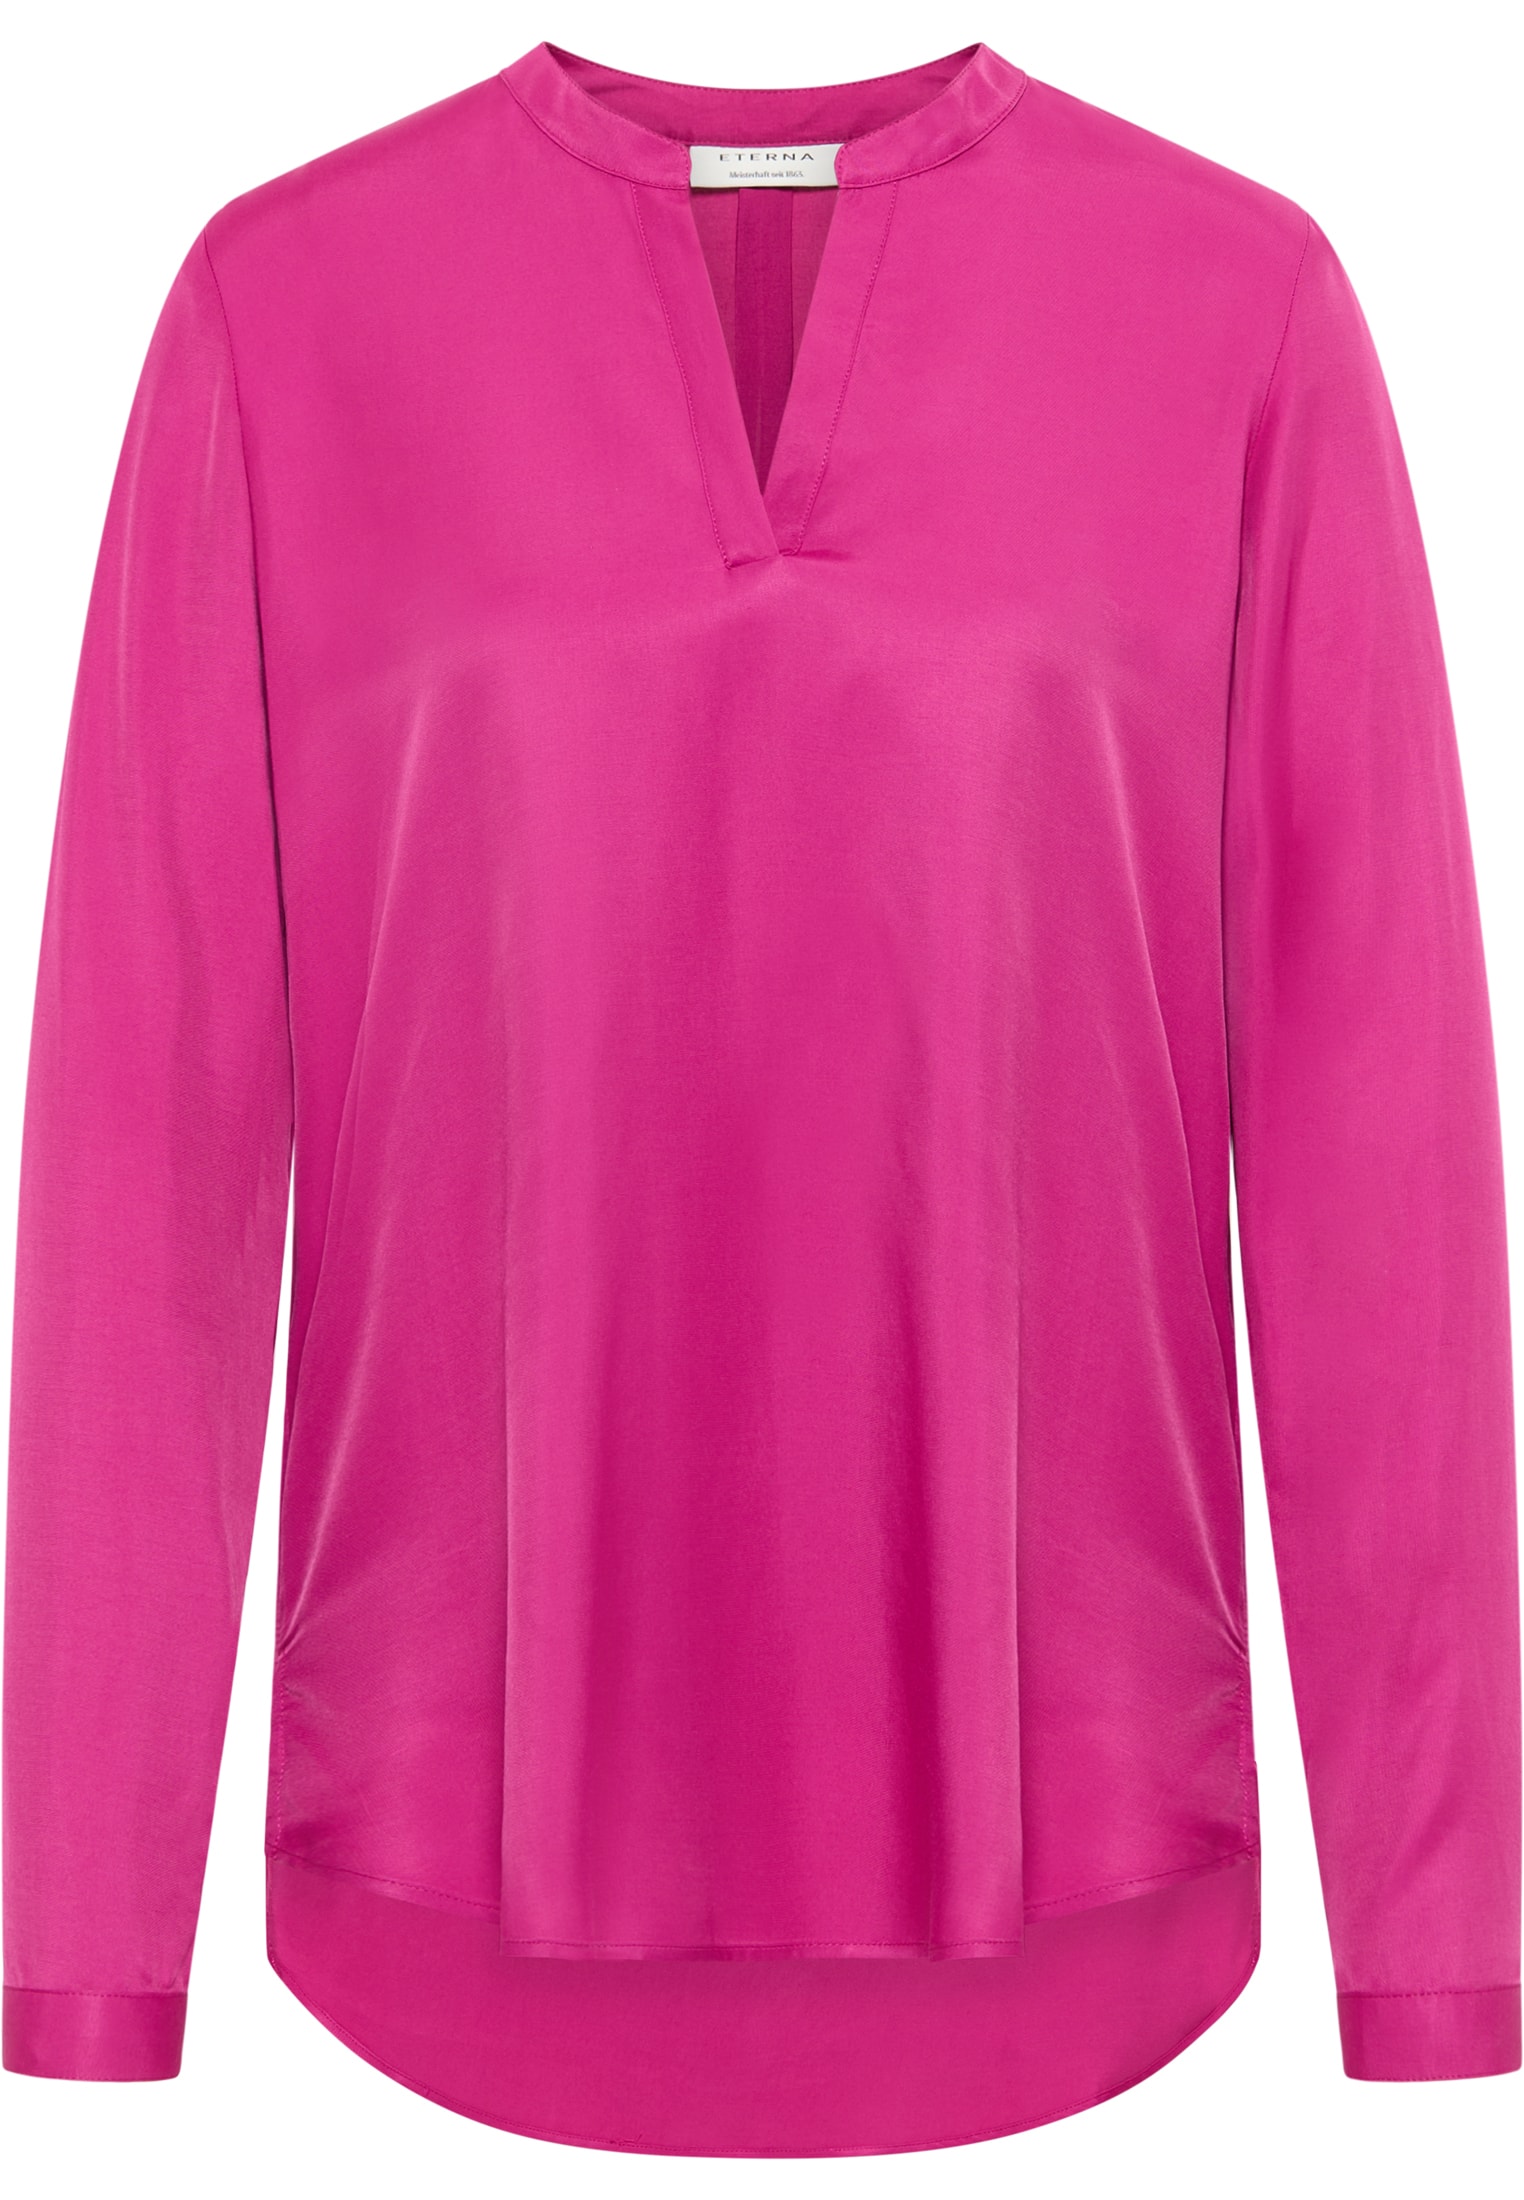 Viscose Shirt Bluse in vibrant pink unifarben | vibrant pink | 34 | Langarm  | 2BL00329-15-31-34-1/1